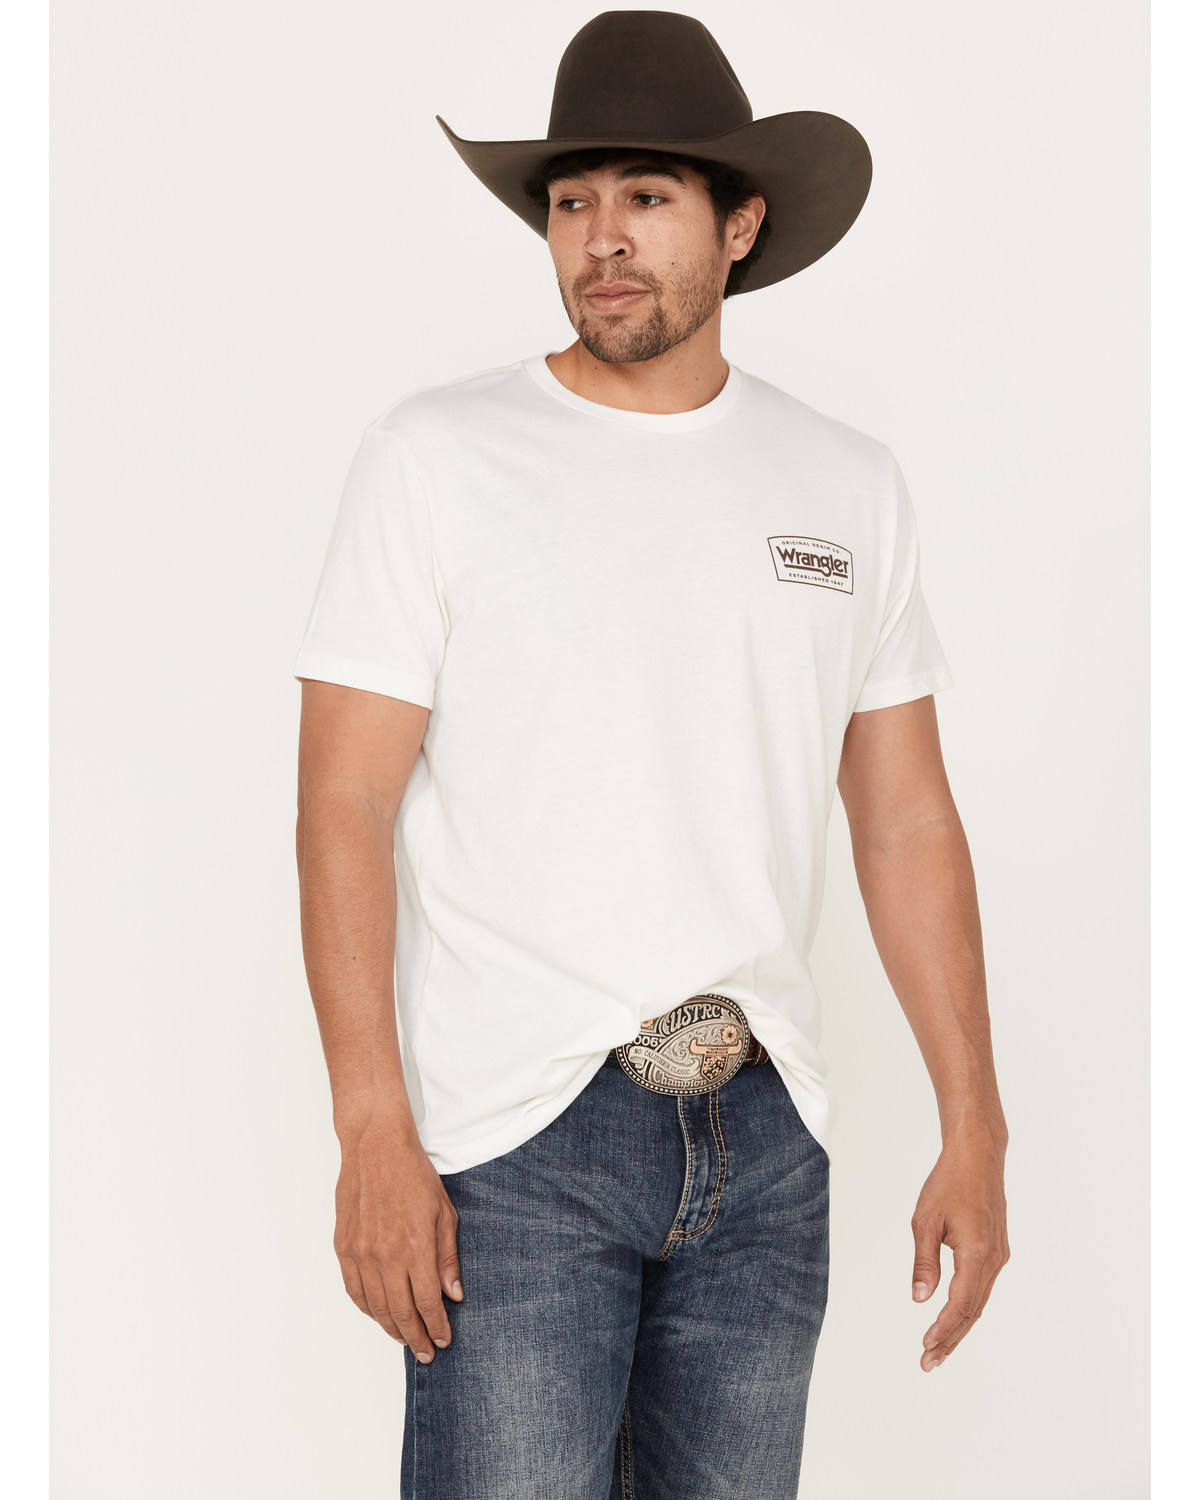 Wrangler Men's Buffalo Sun Short Sleeve Graphic T-Shirt